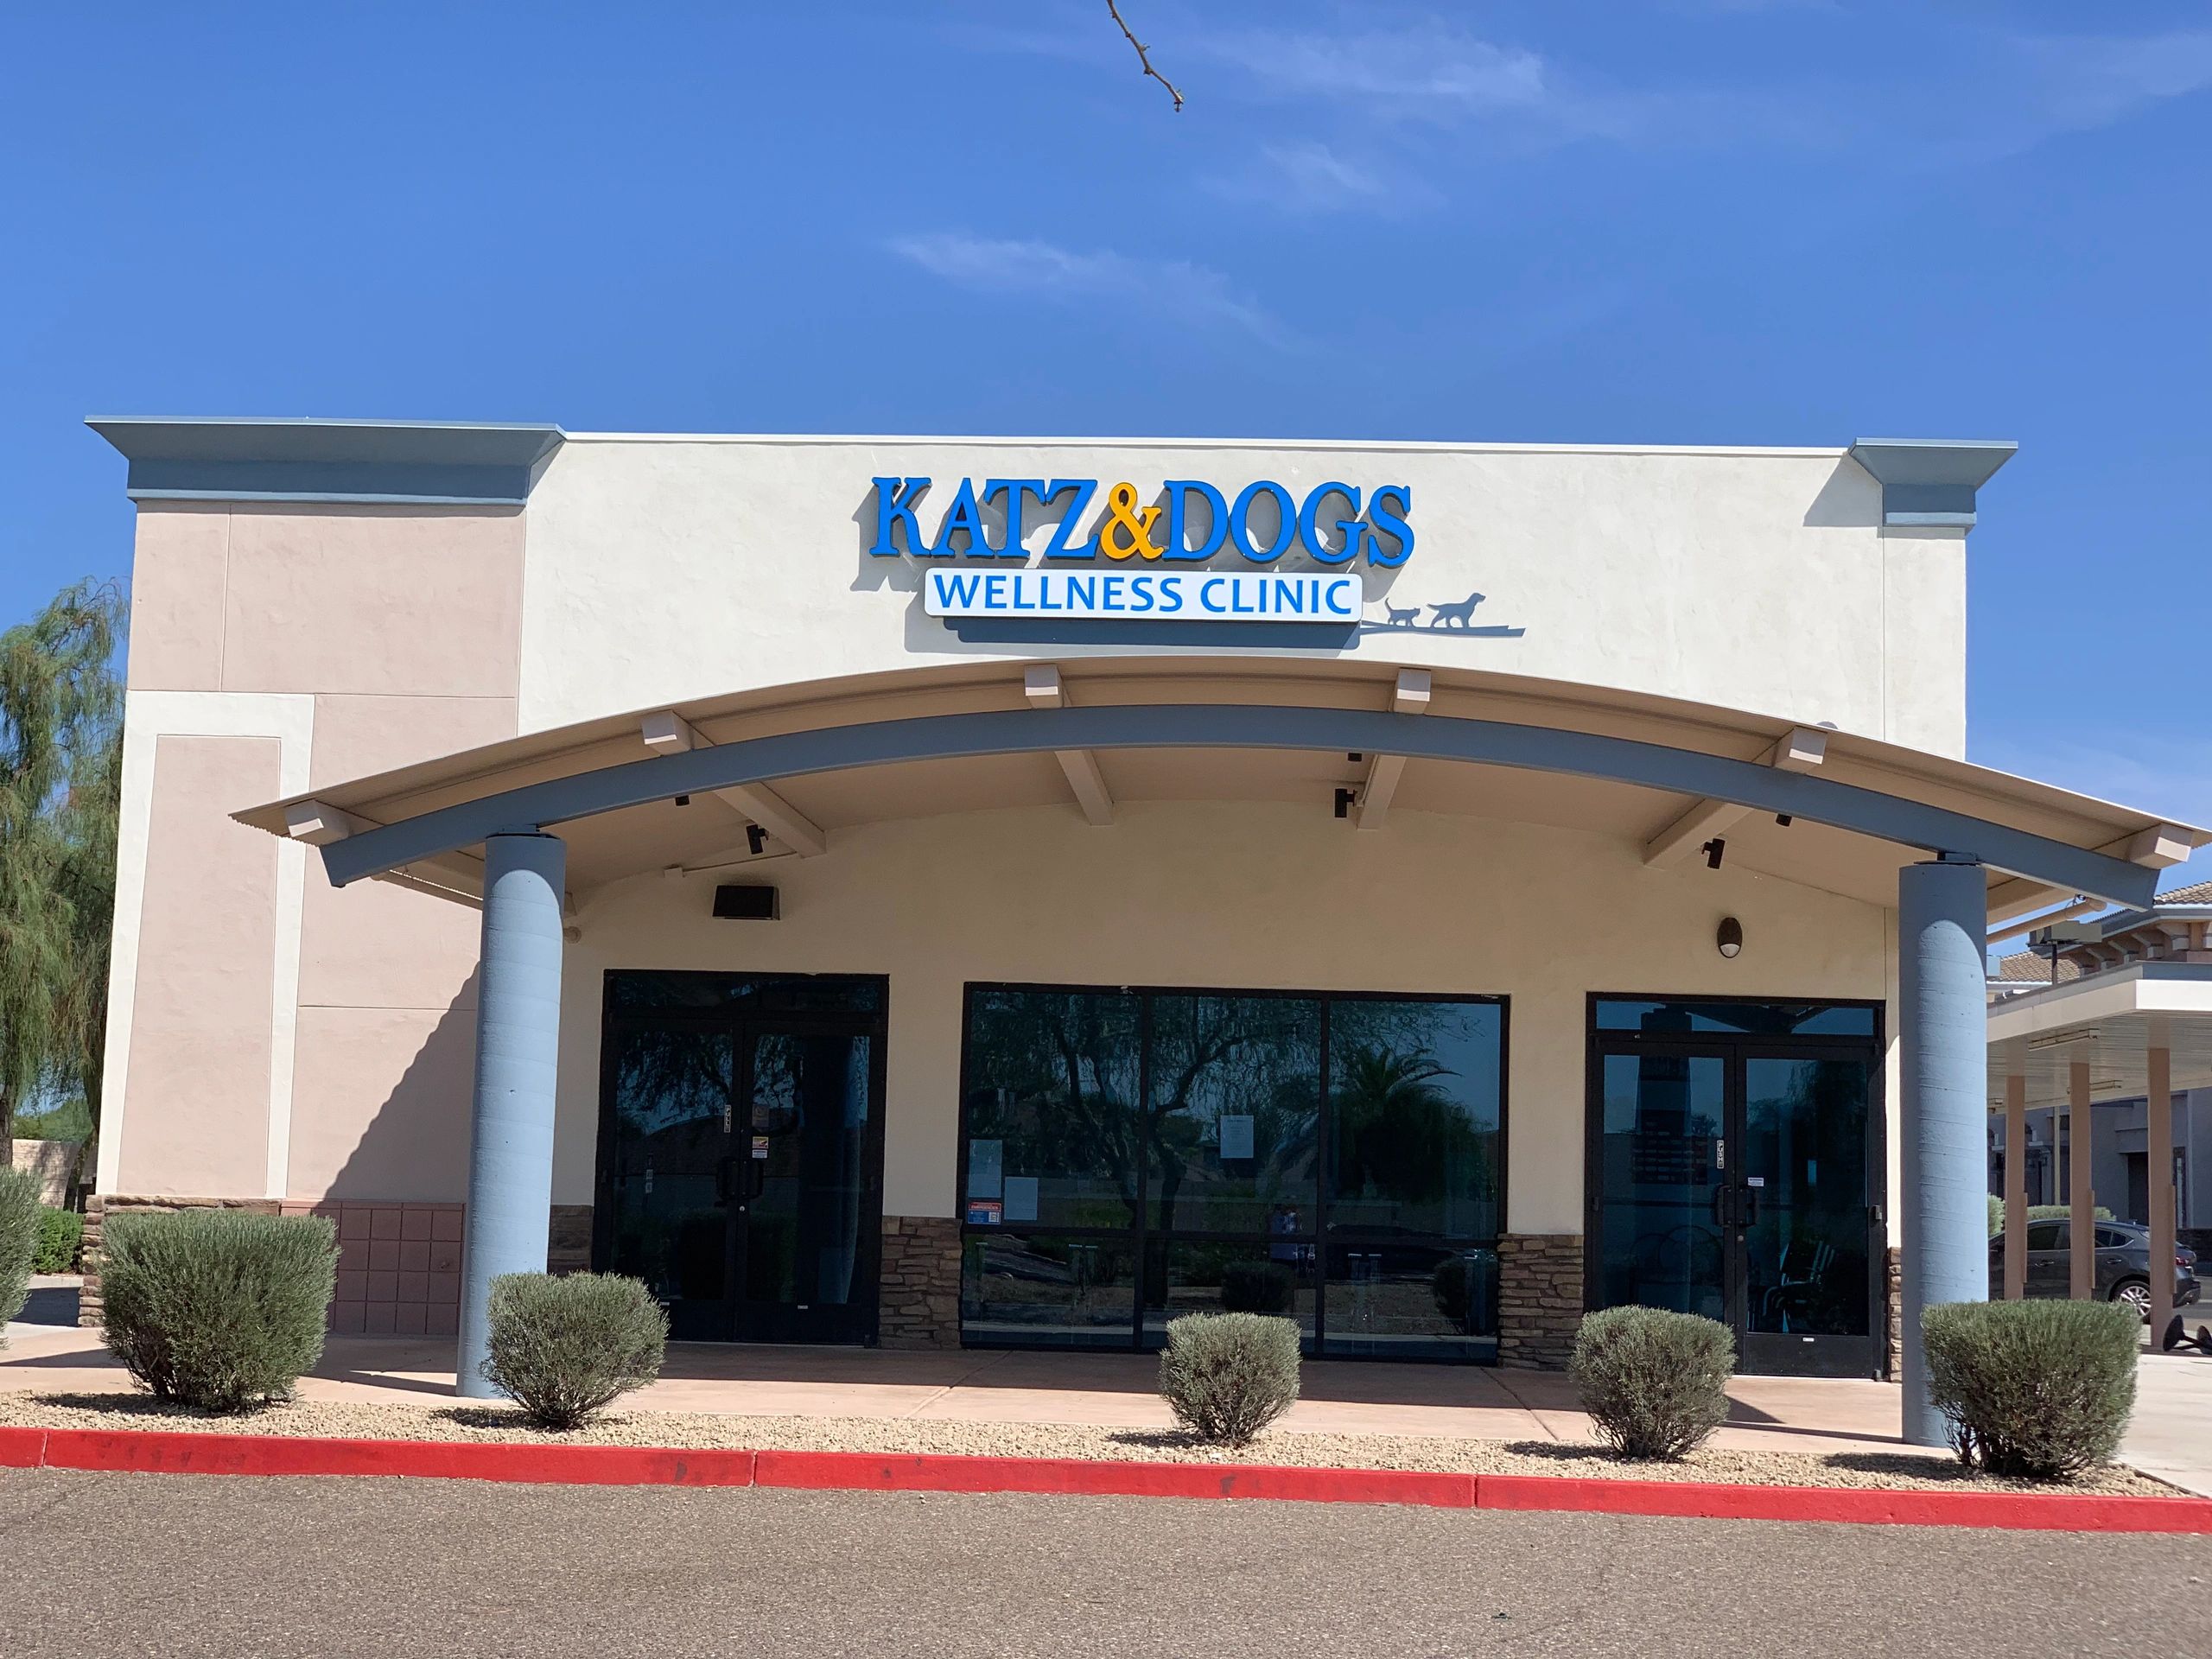 Katz and Dogs Wellness Clinic